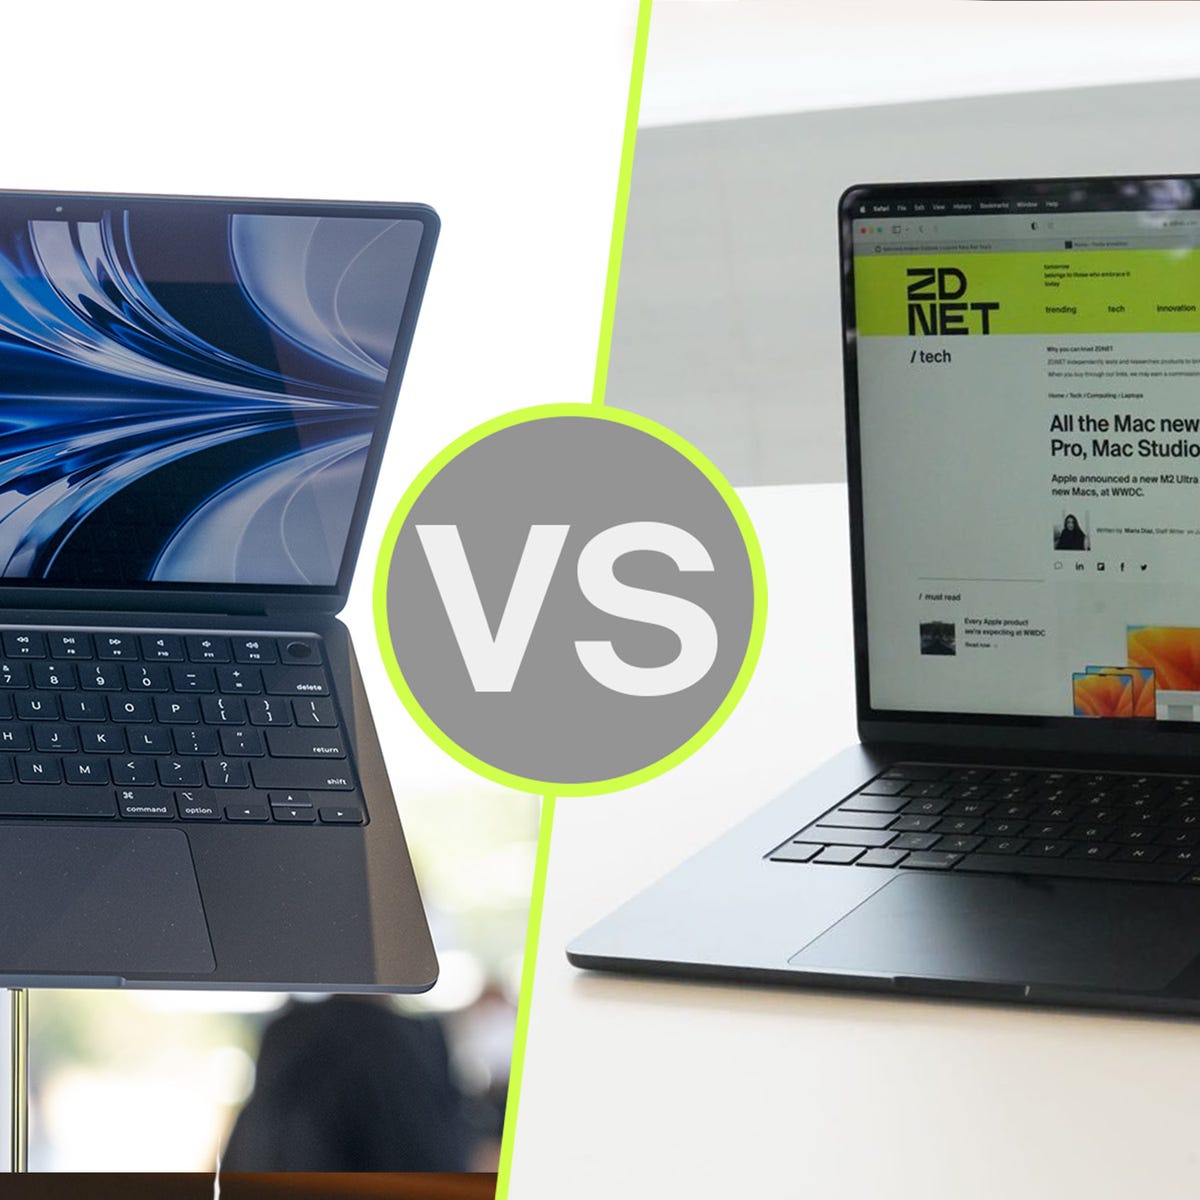 MacBook Air (15-inch) vs MacBook Air (13-inch): Which model should you buy?